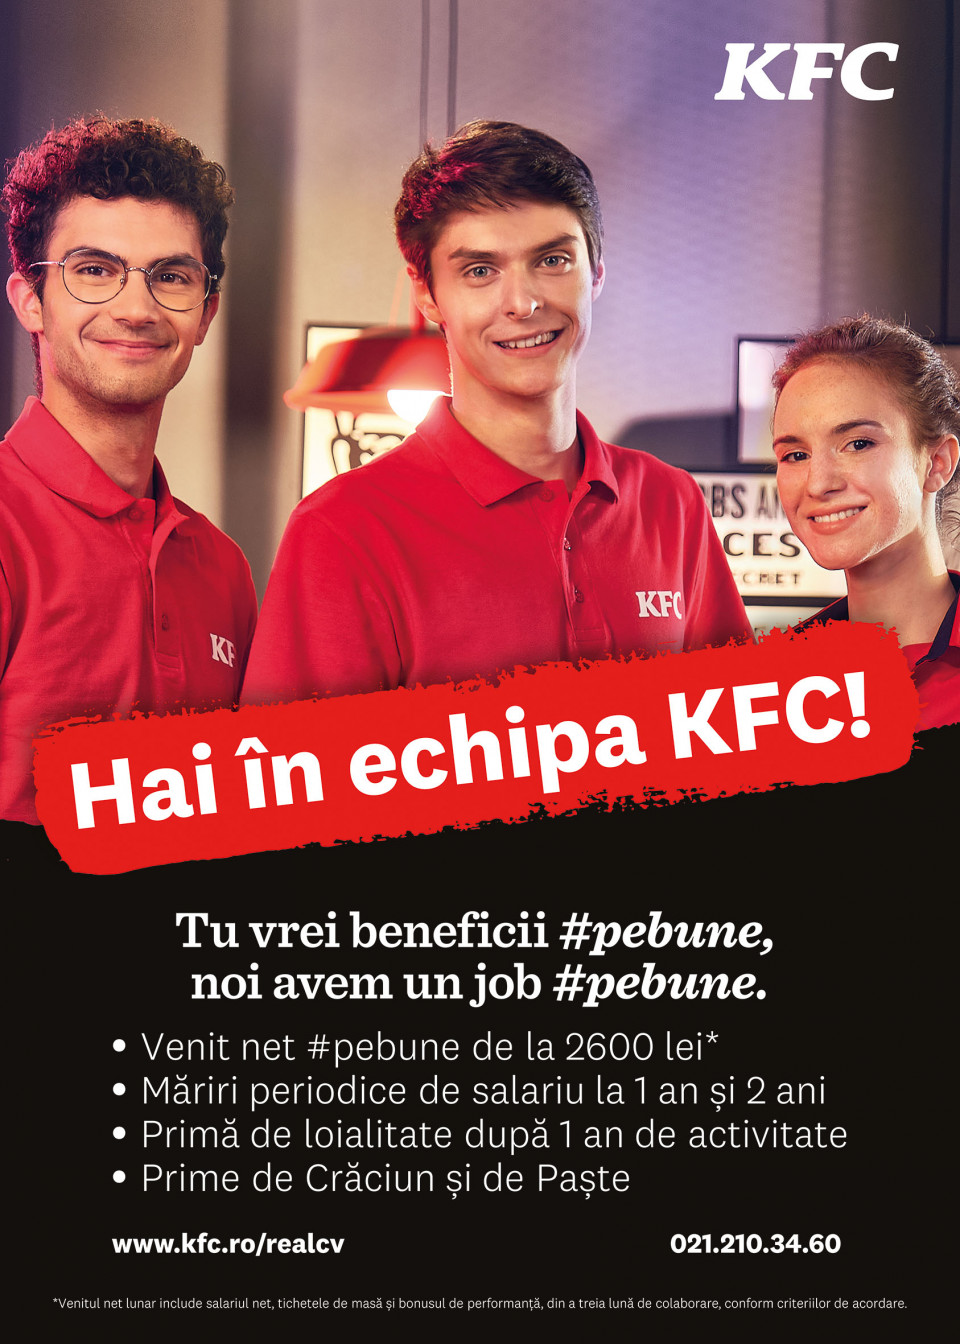 Cautam casieri si lucratori in bucatarie #pebune! Hai la KFC!